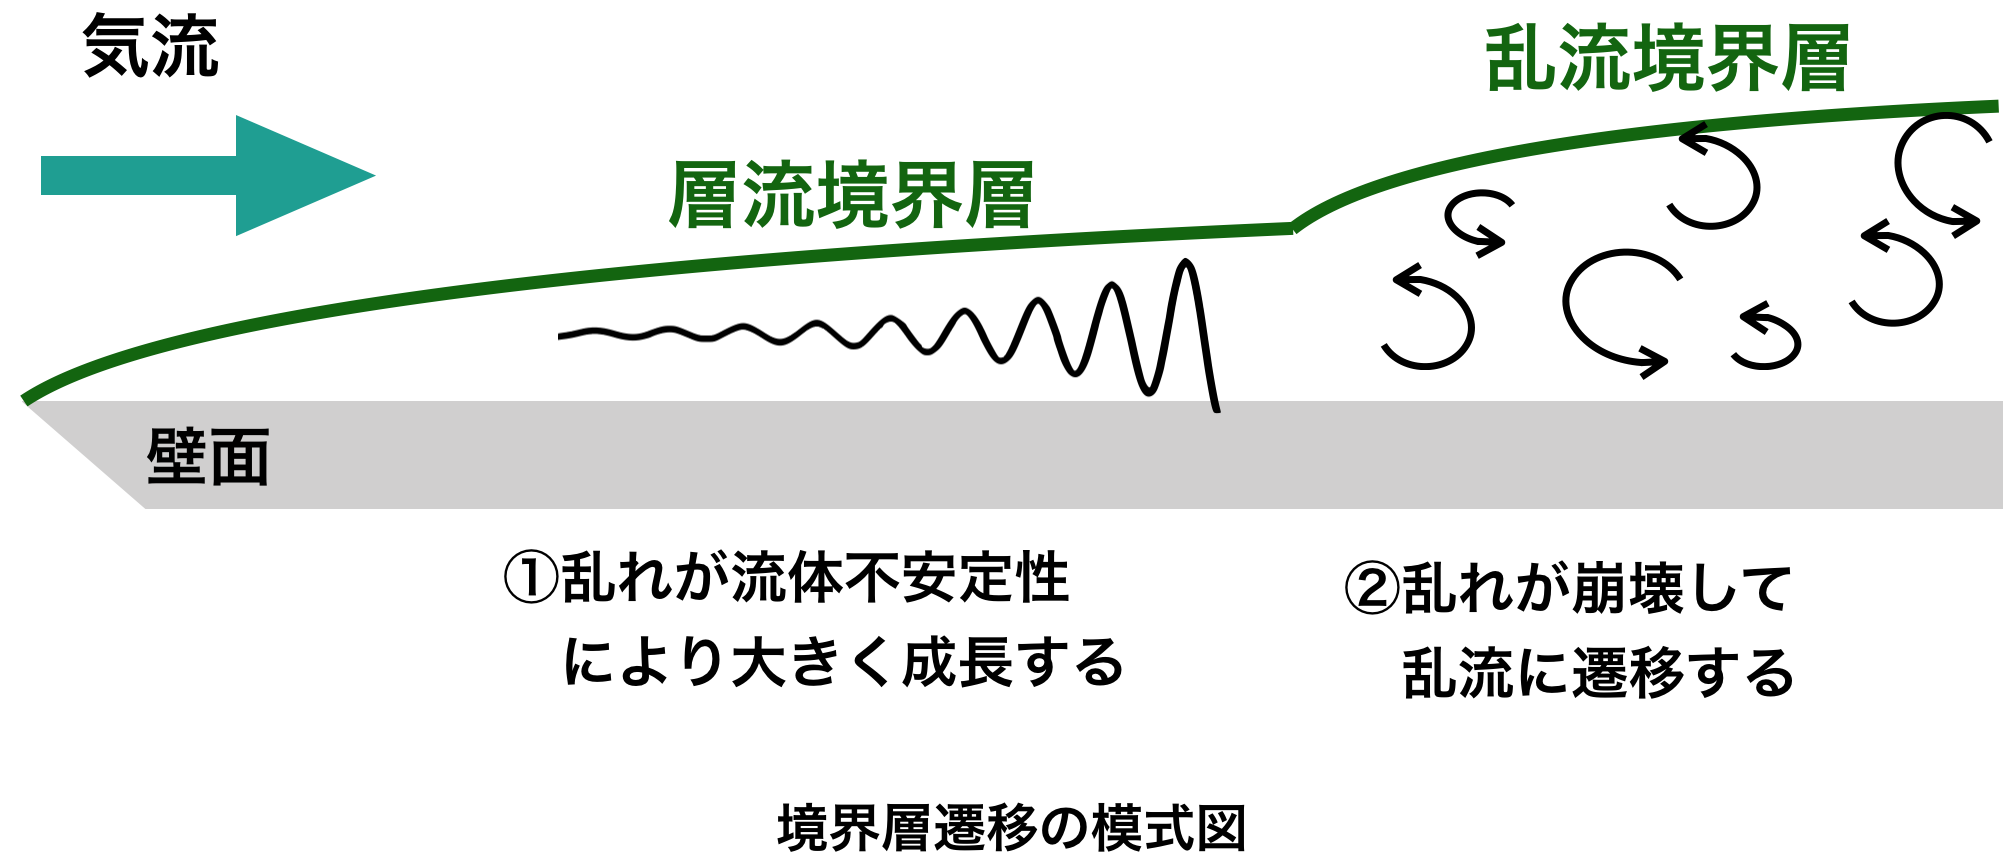 Ohnishi/Takahashi Laboratory| Hypersonic Flow